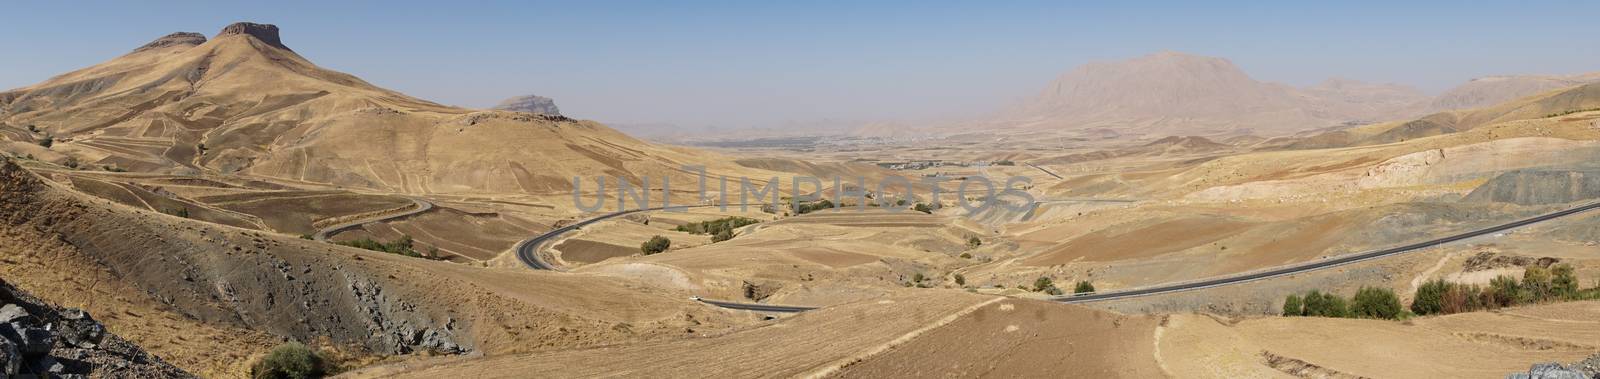 Landscape, Kermanshah, Iran, Asia by alfotokunst